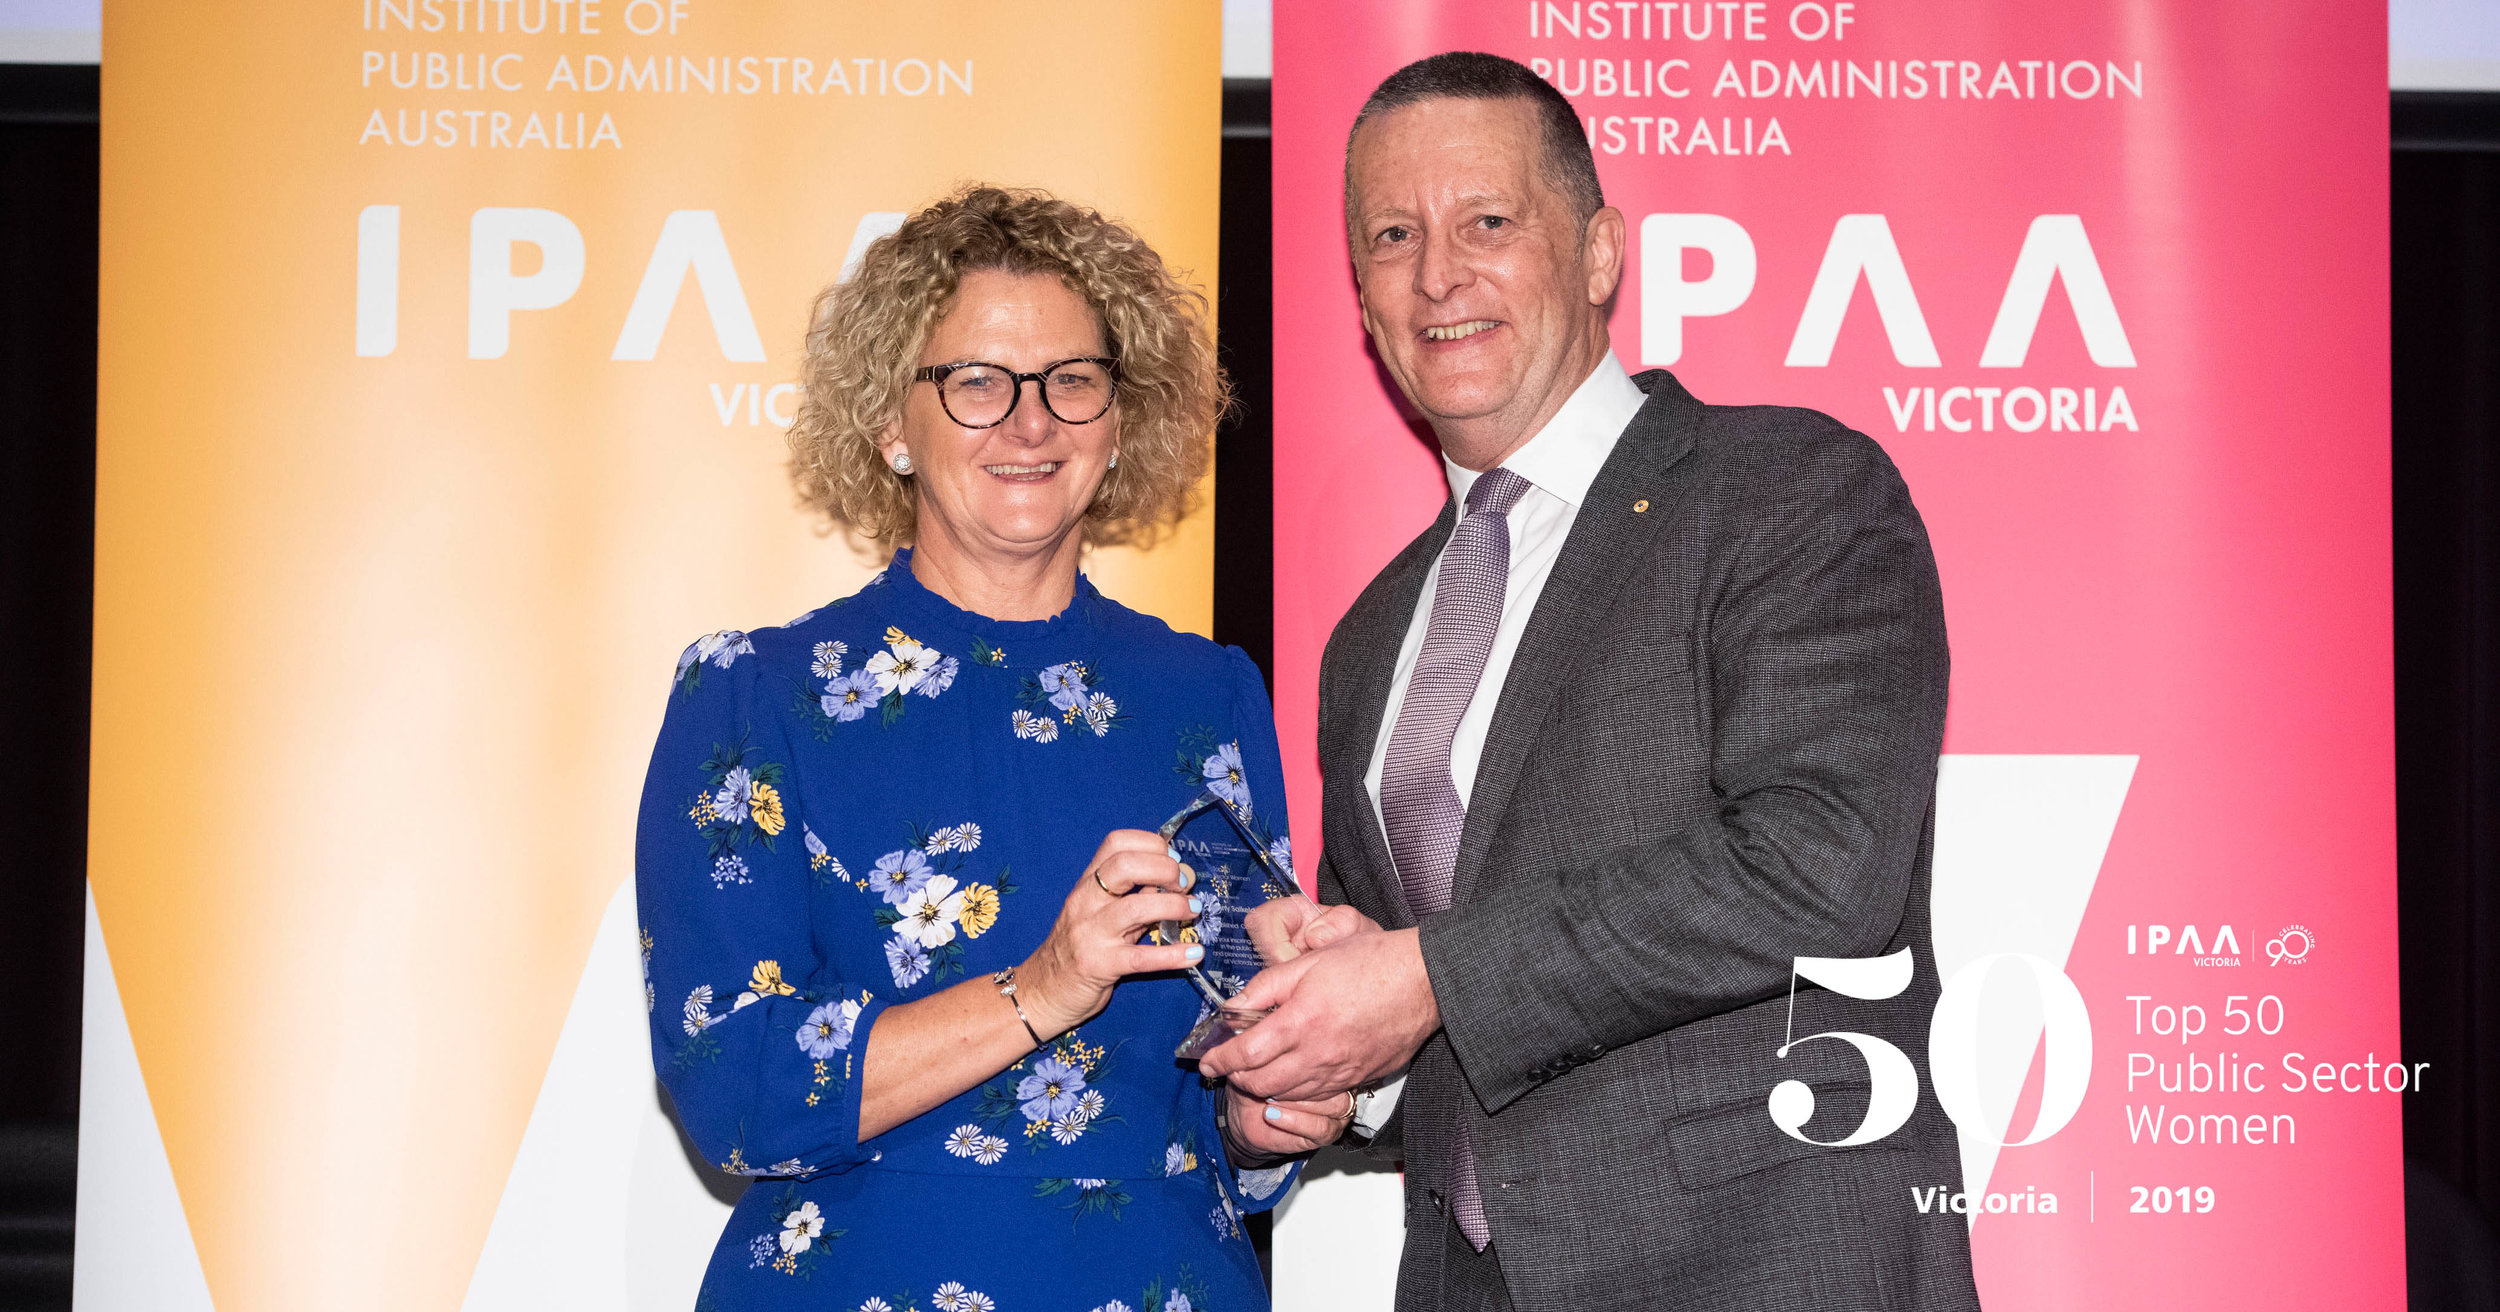 IPAA Victoria Top 50 Public Sector Women (Victoria) 2019